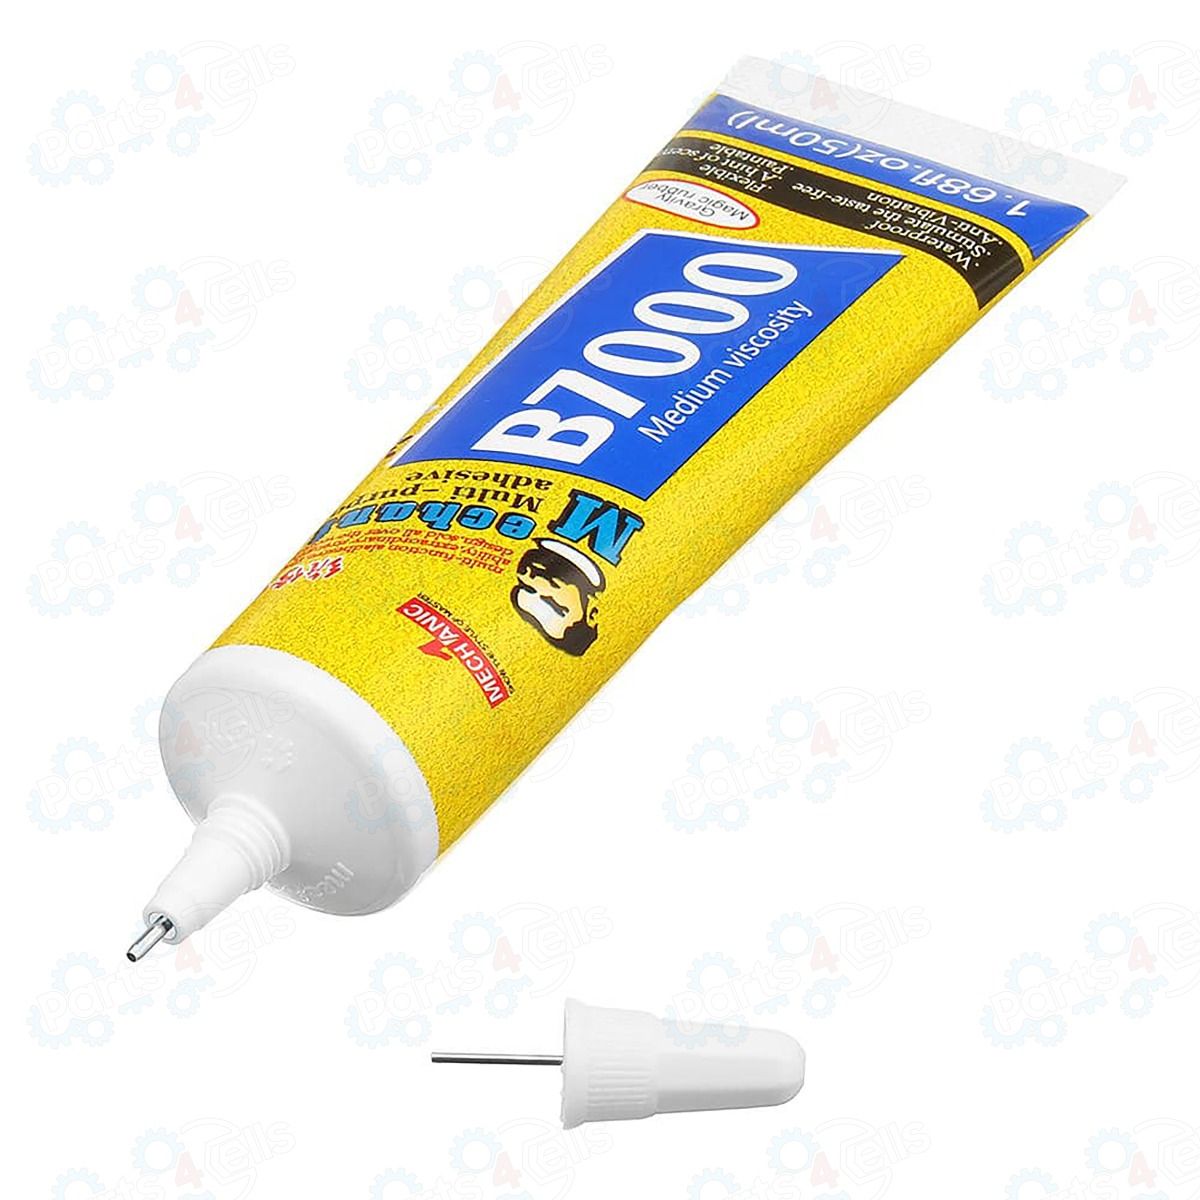 B-7000 Multipurpose Adhesive Glue